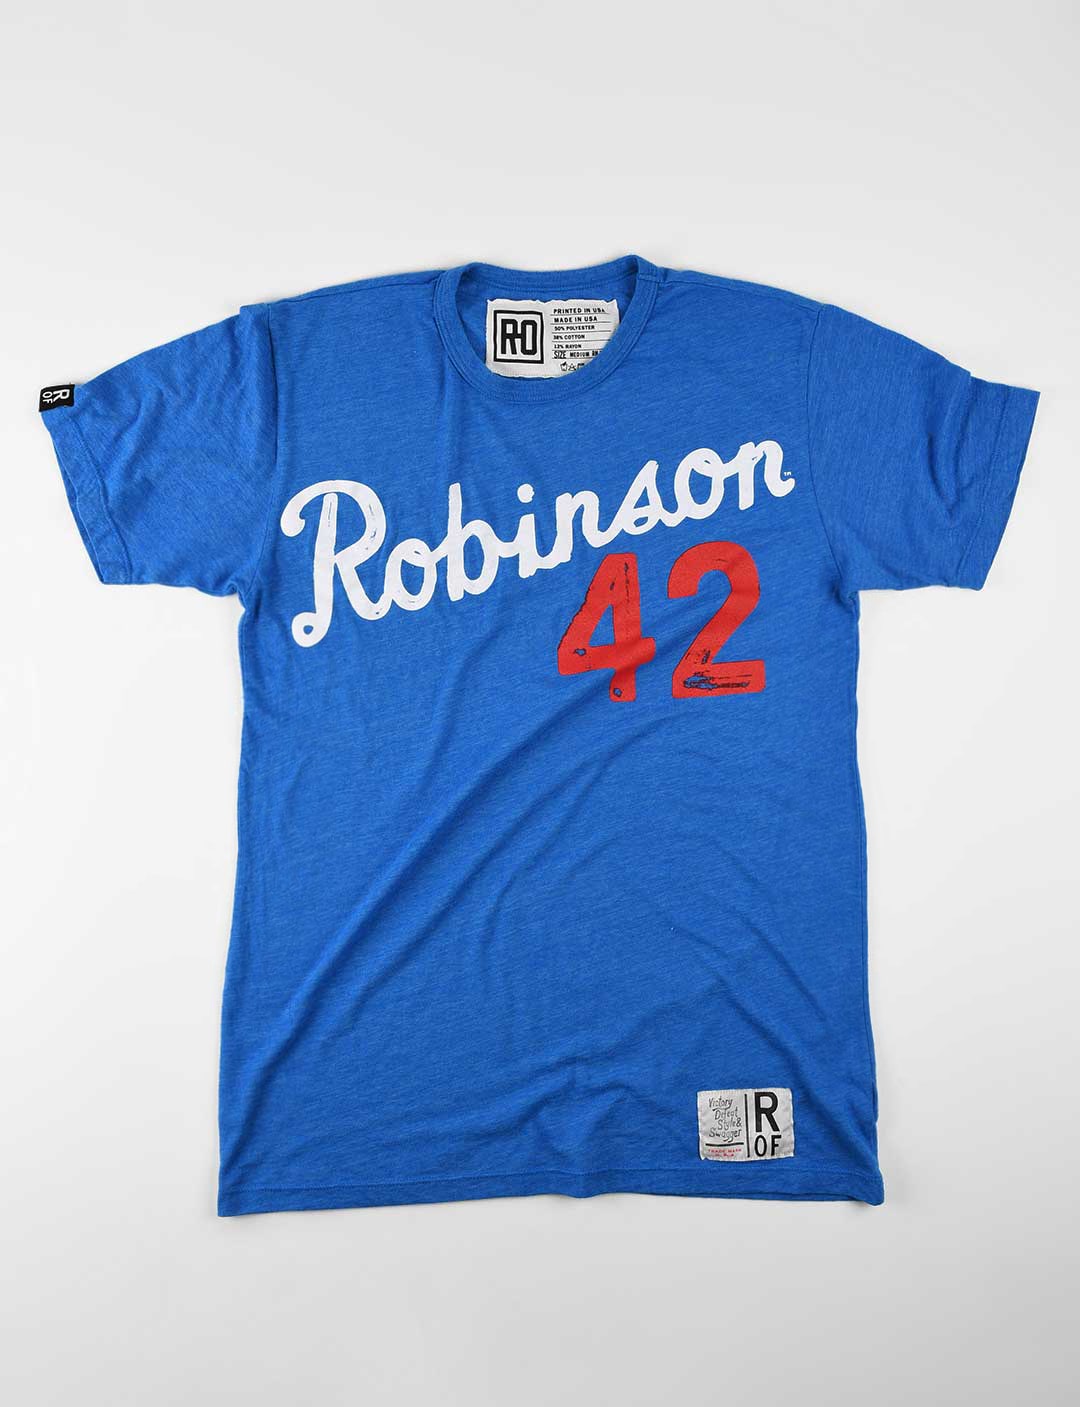 42 robinson jersey